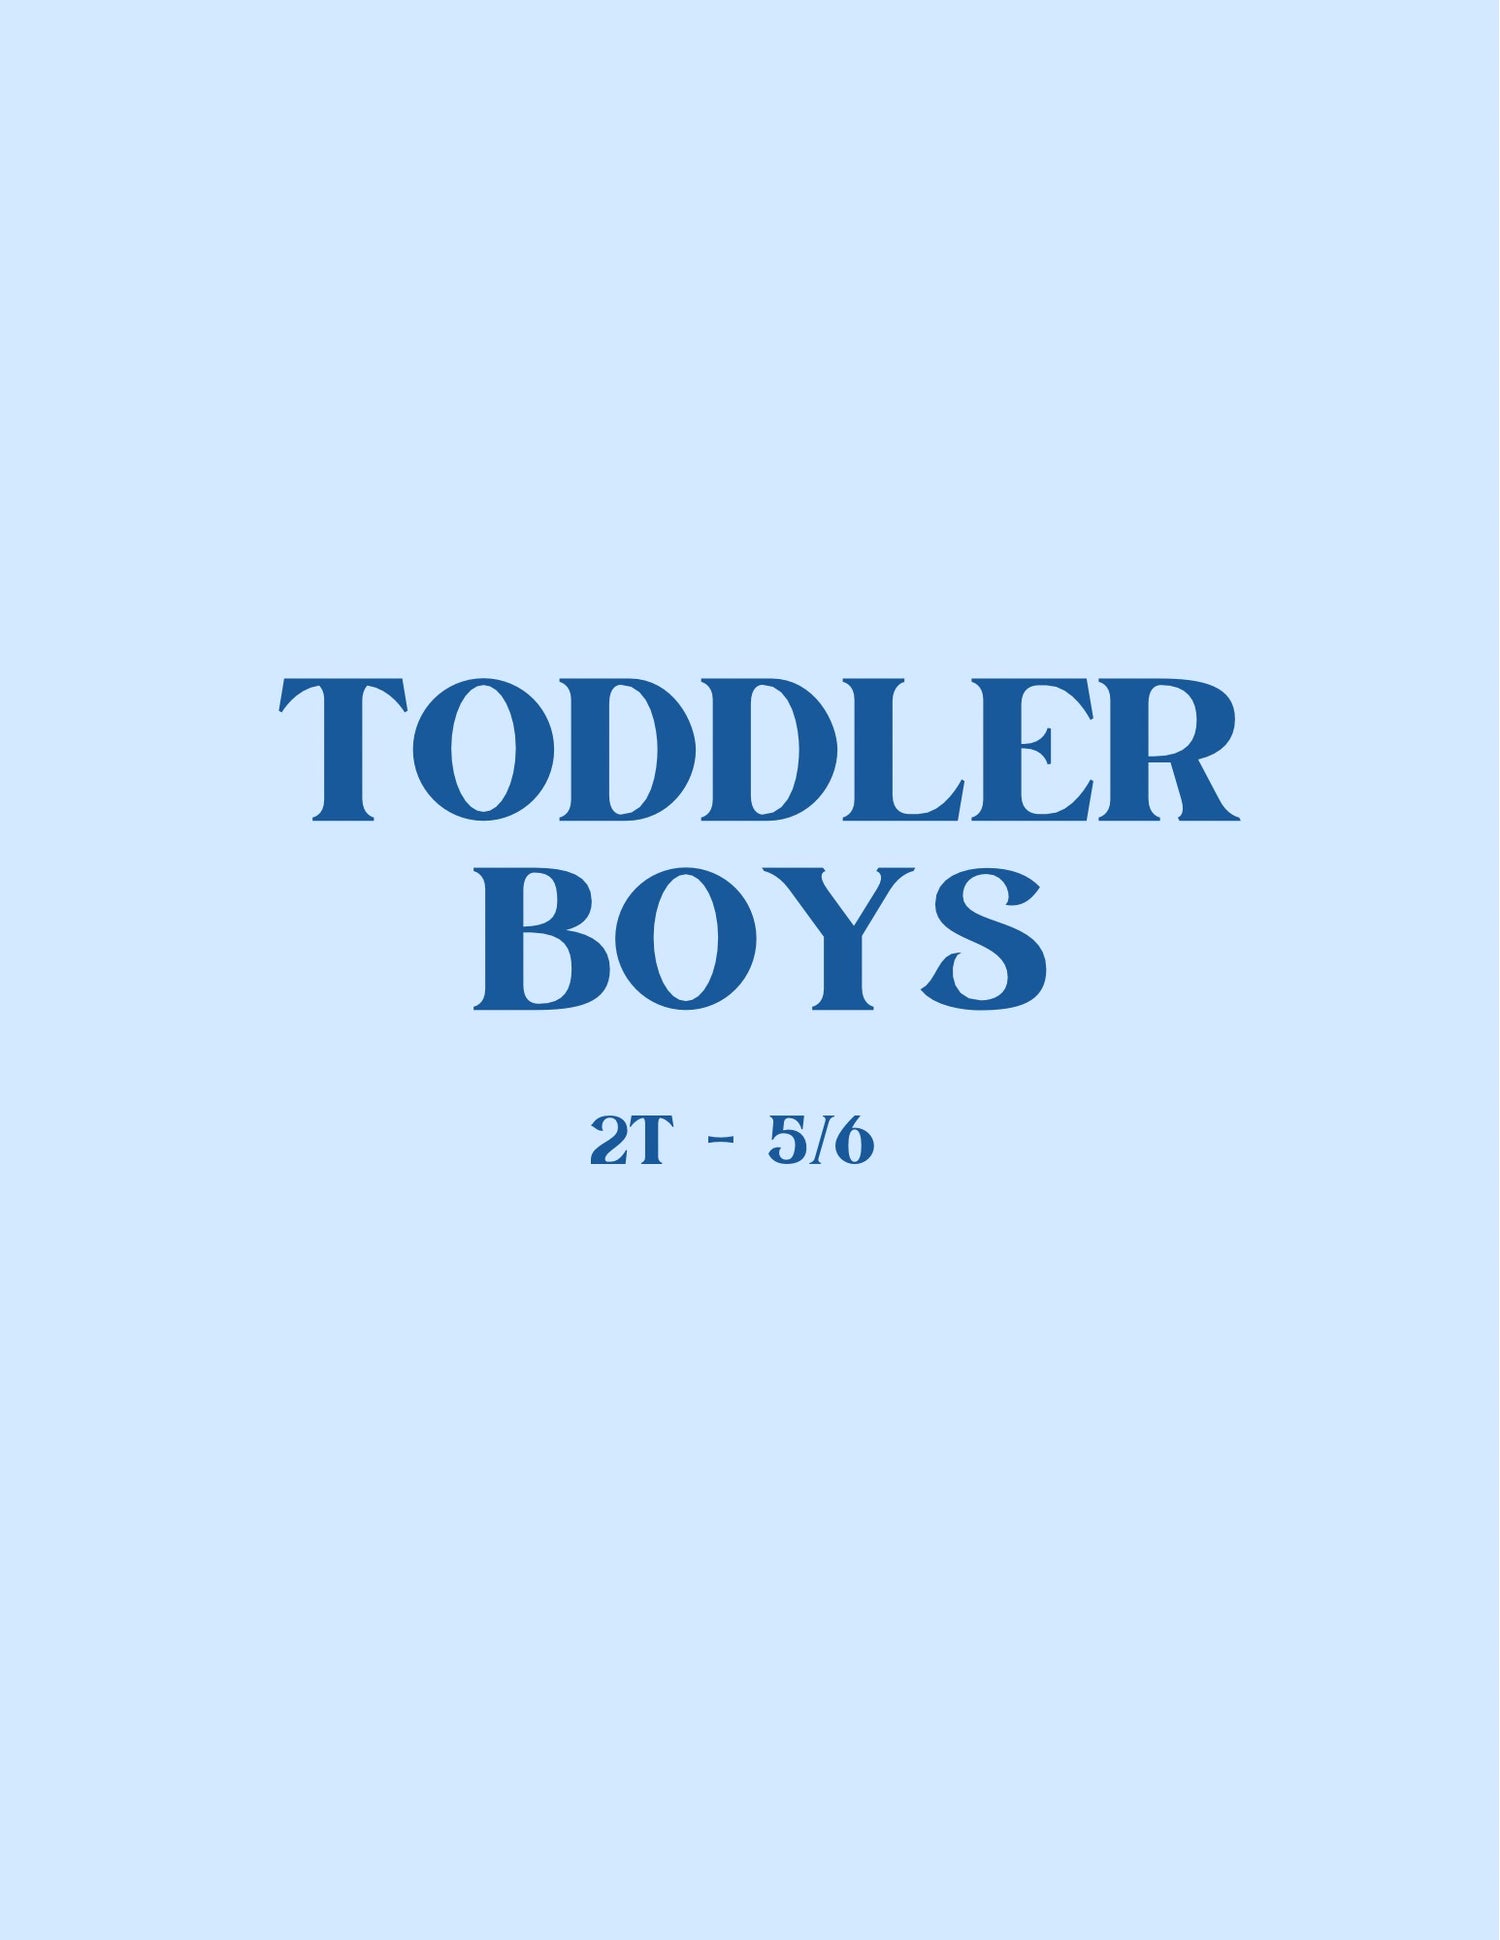 Toddler Boys